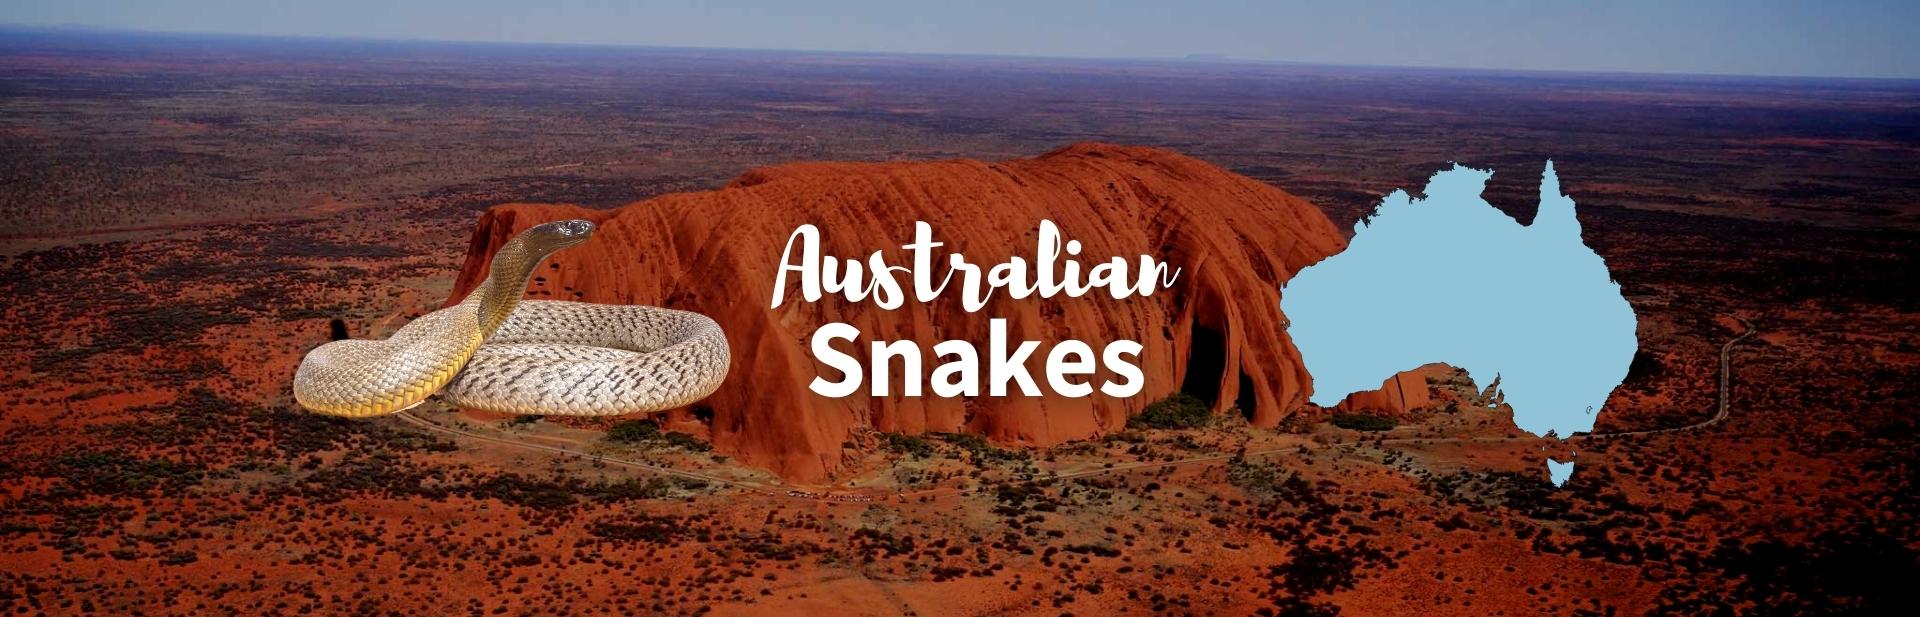 10 Most Venomous Australian Snakes in the World